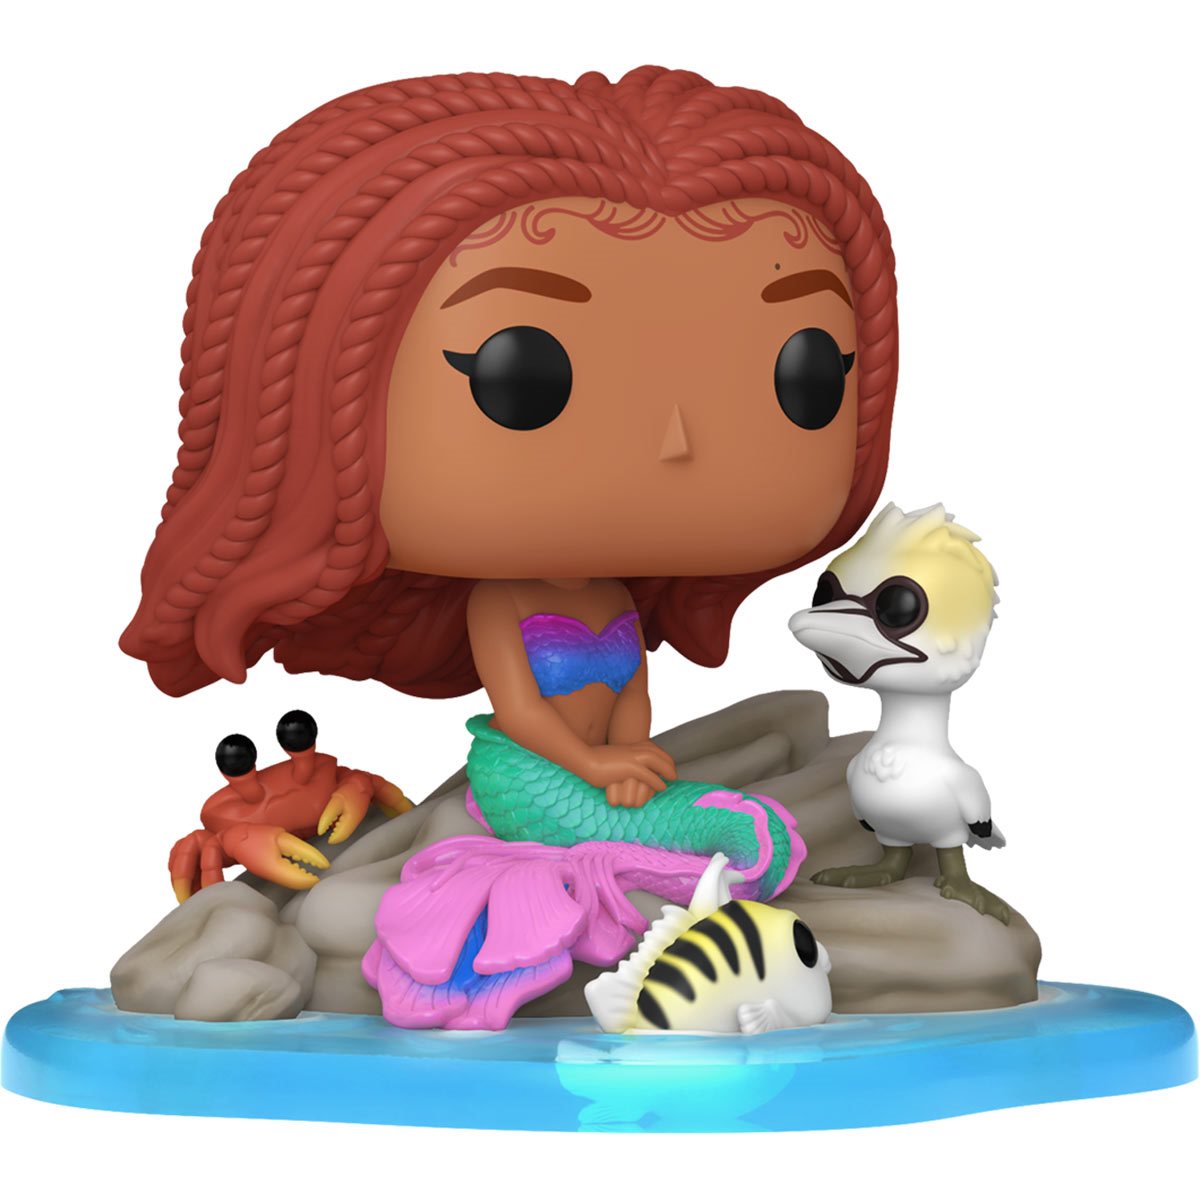 Figurine Pop Disney Ariel 1012- Funko Pop !